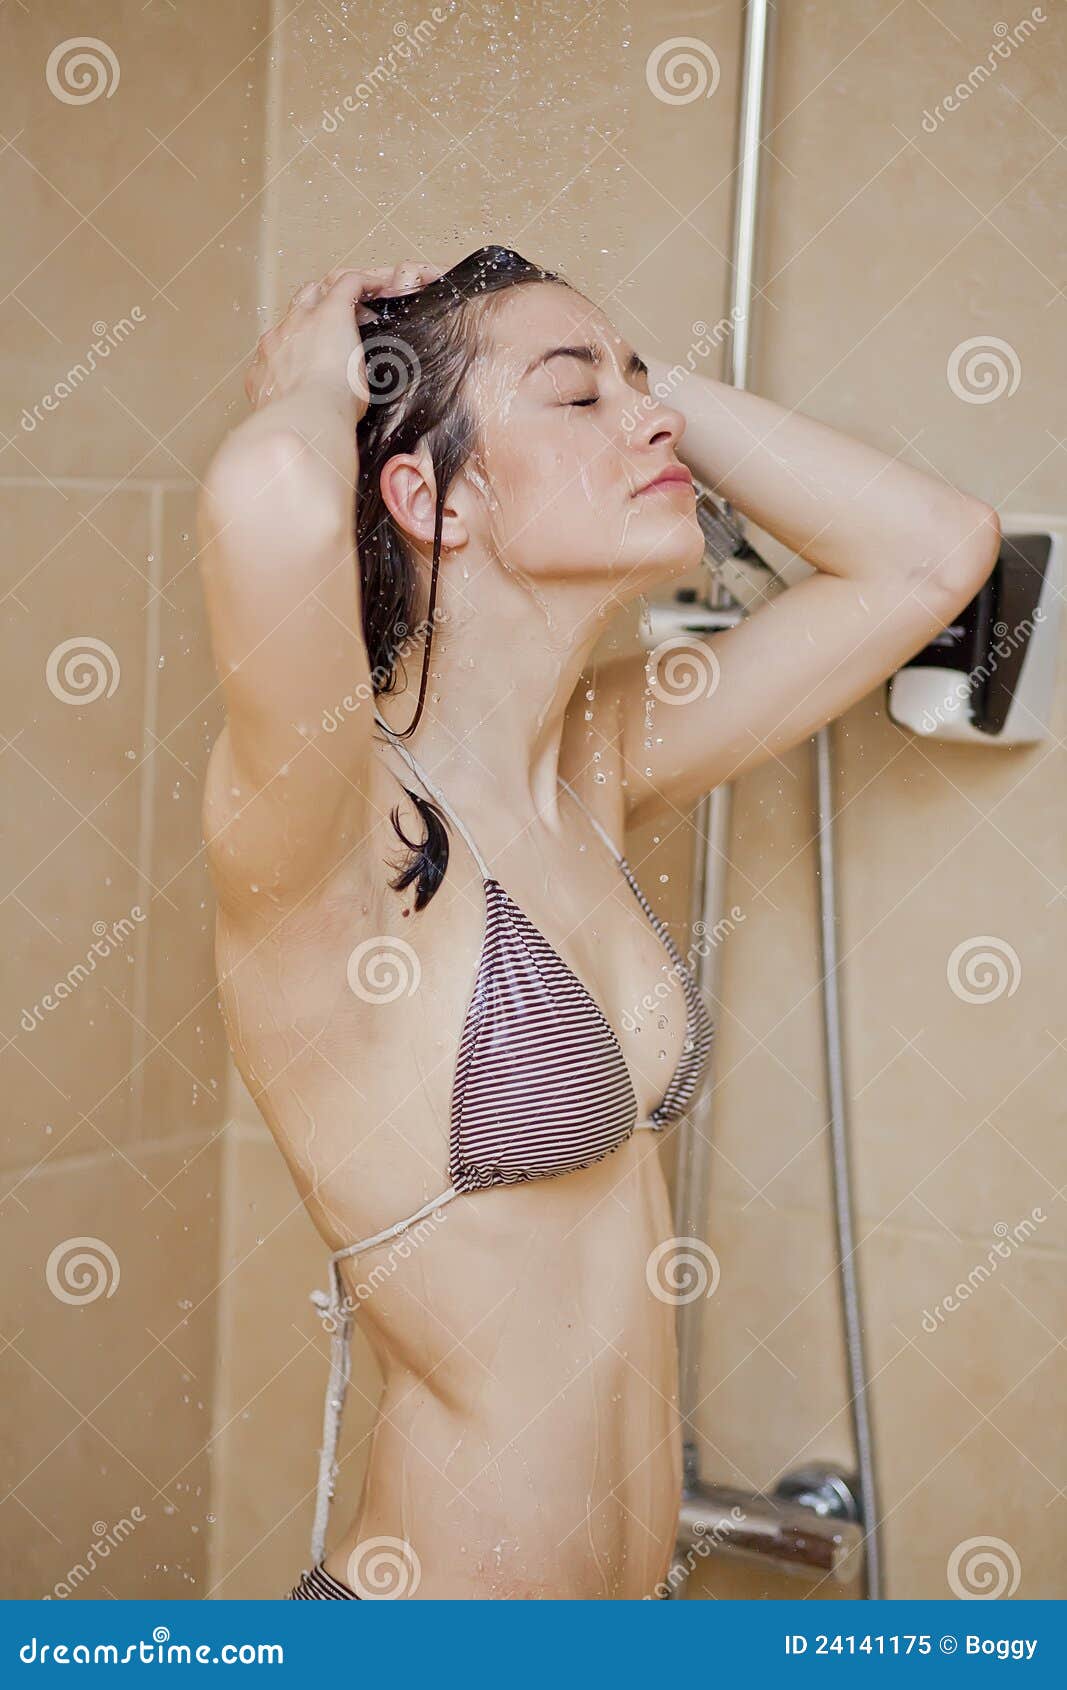 caroline stoddart share girls getting in shower photos